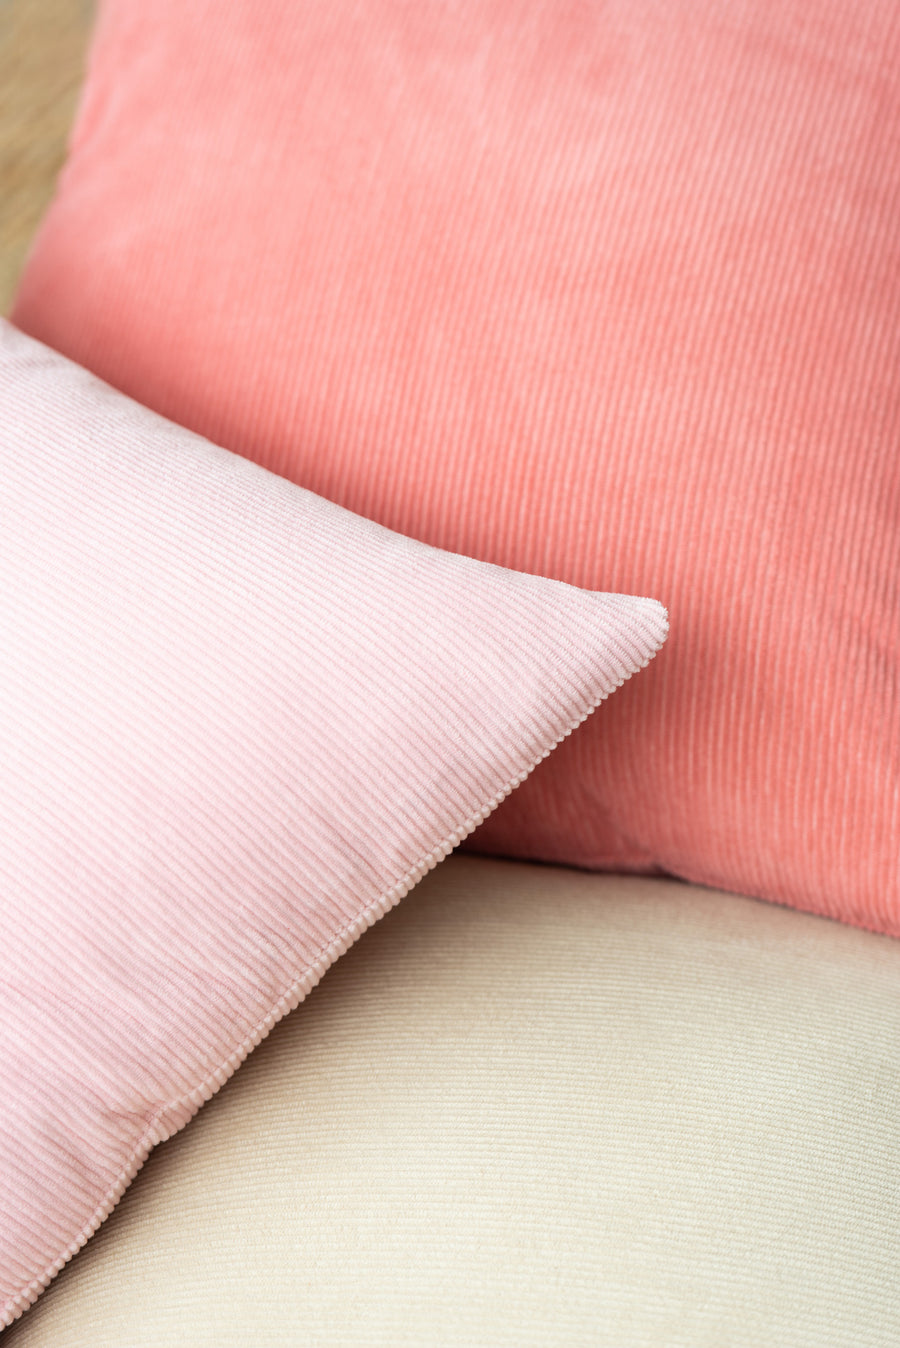 Modern Pillow Cover, Corduroy, Blush Pink, 18